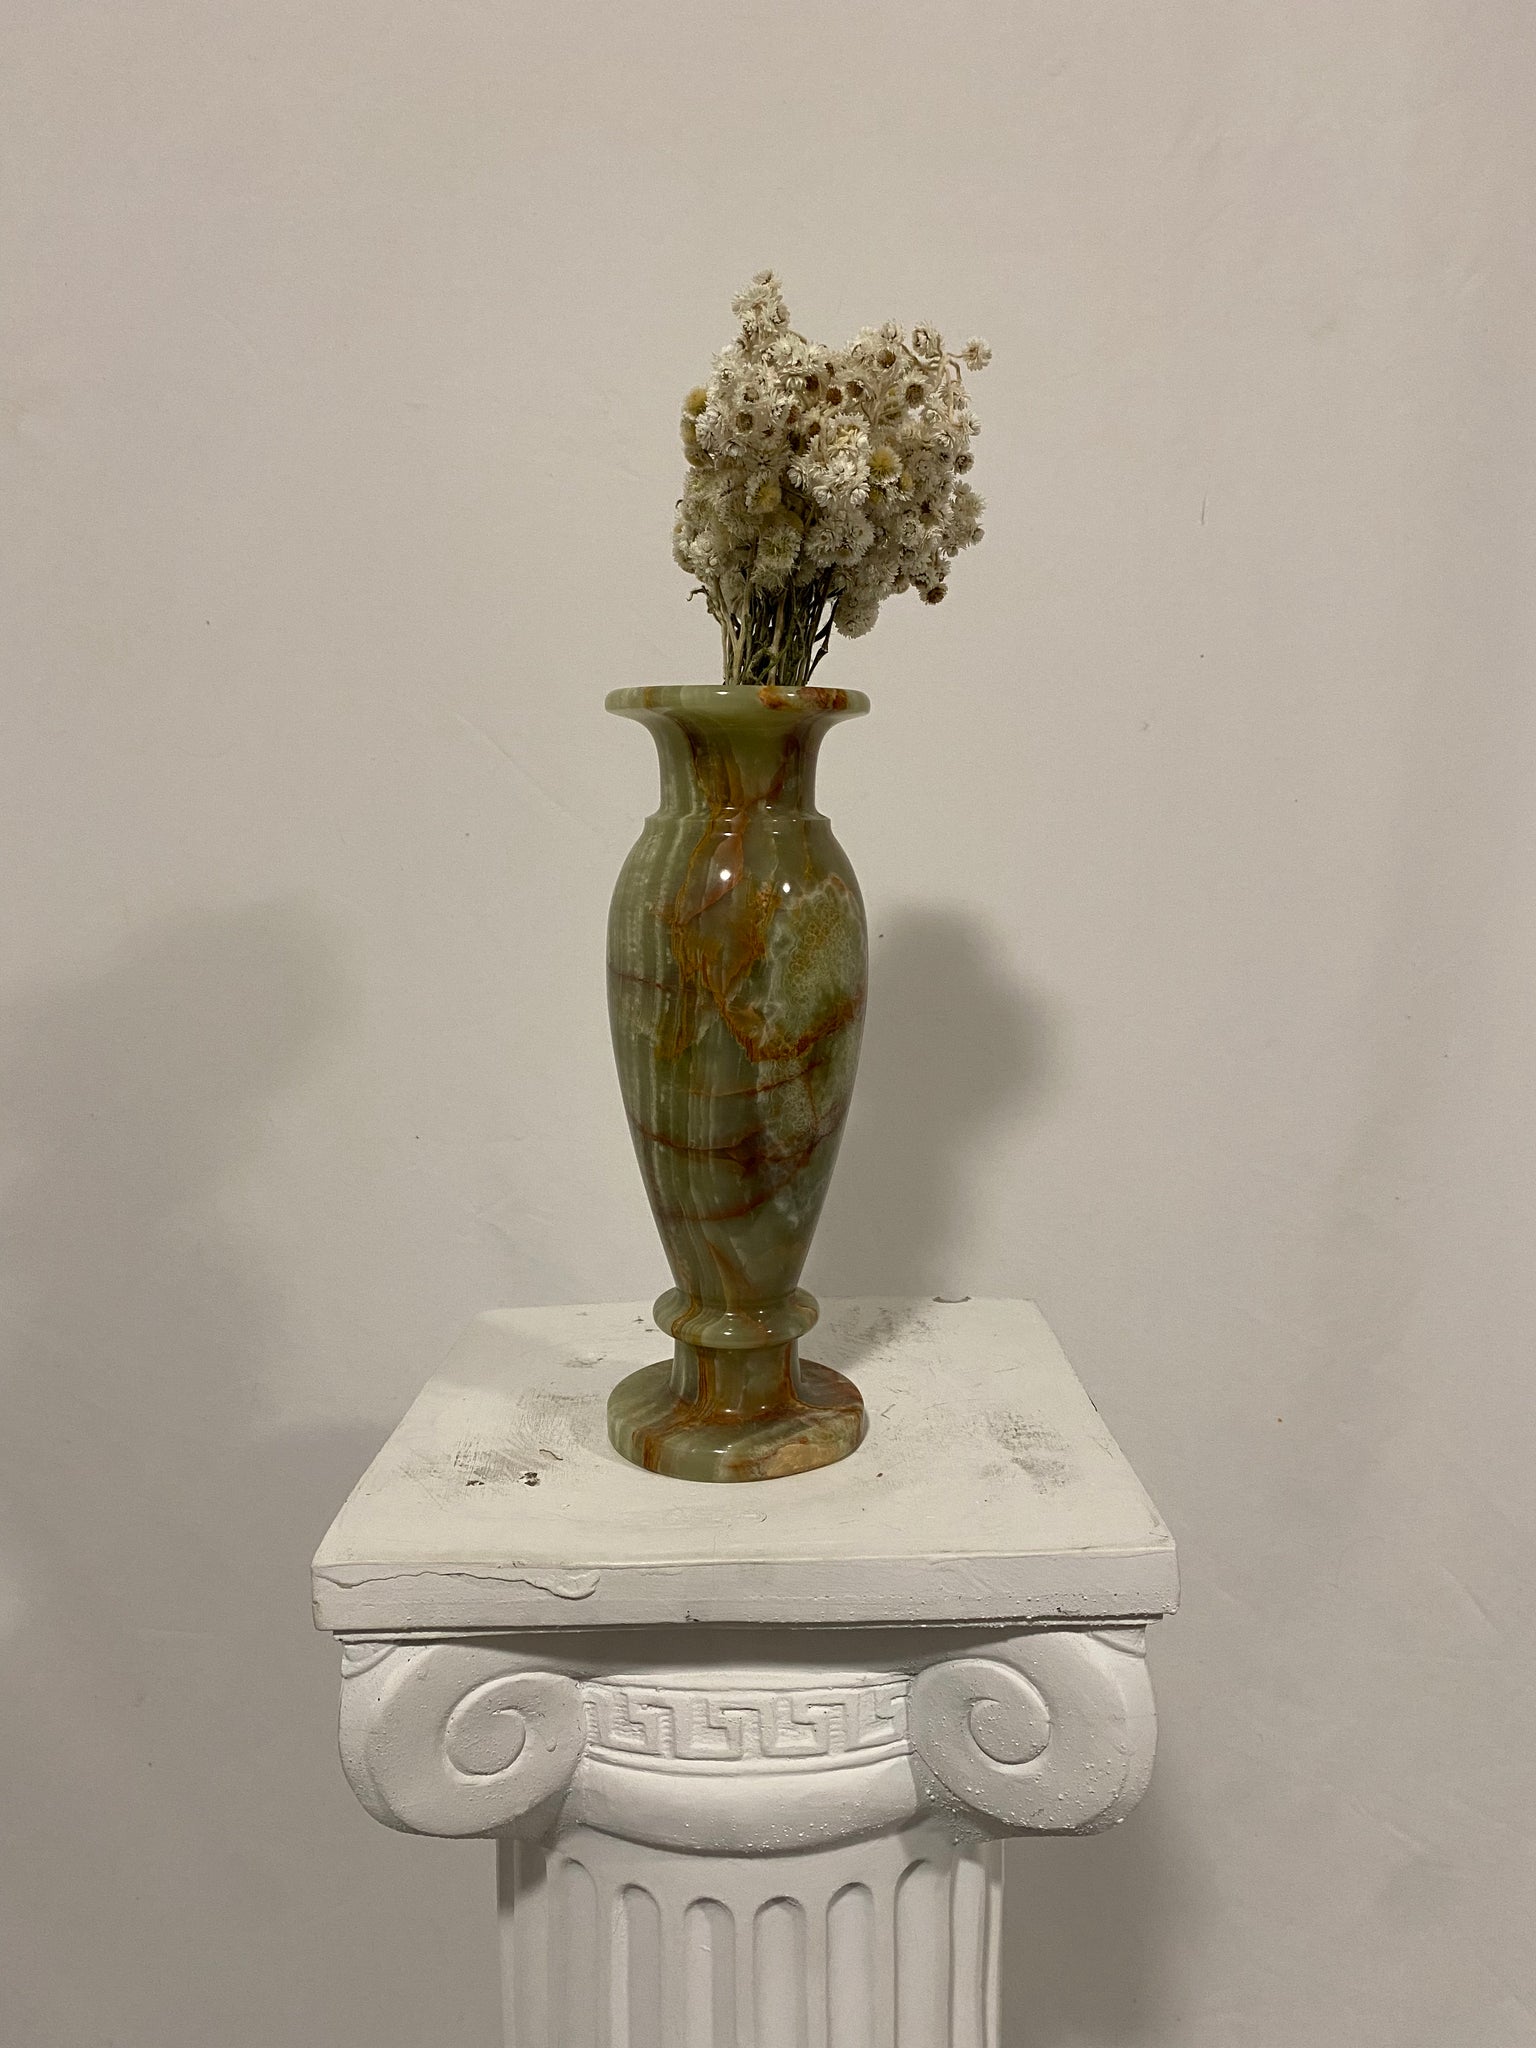 Green marbled stone vase